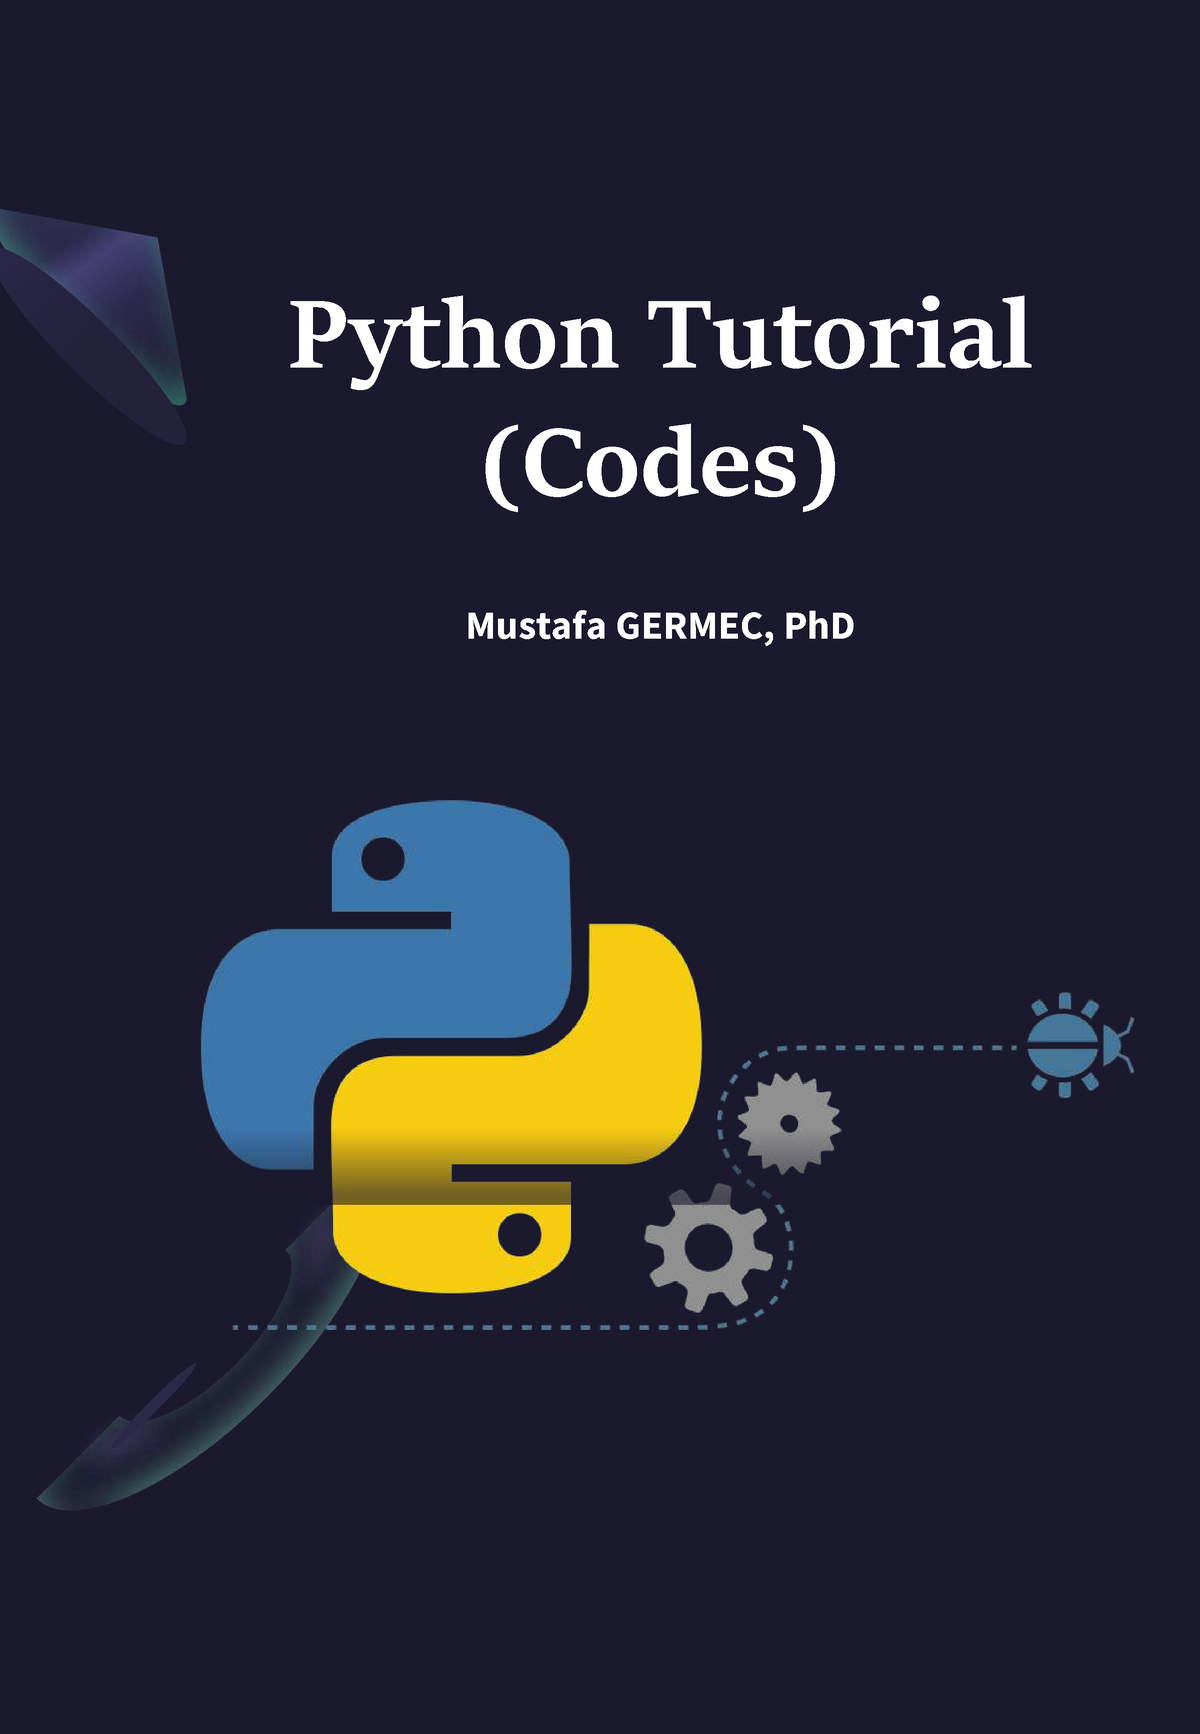 Python jupyter workbook-1 - Python Tutorial (Codes) Mustafa GERMEC, PhD ...